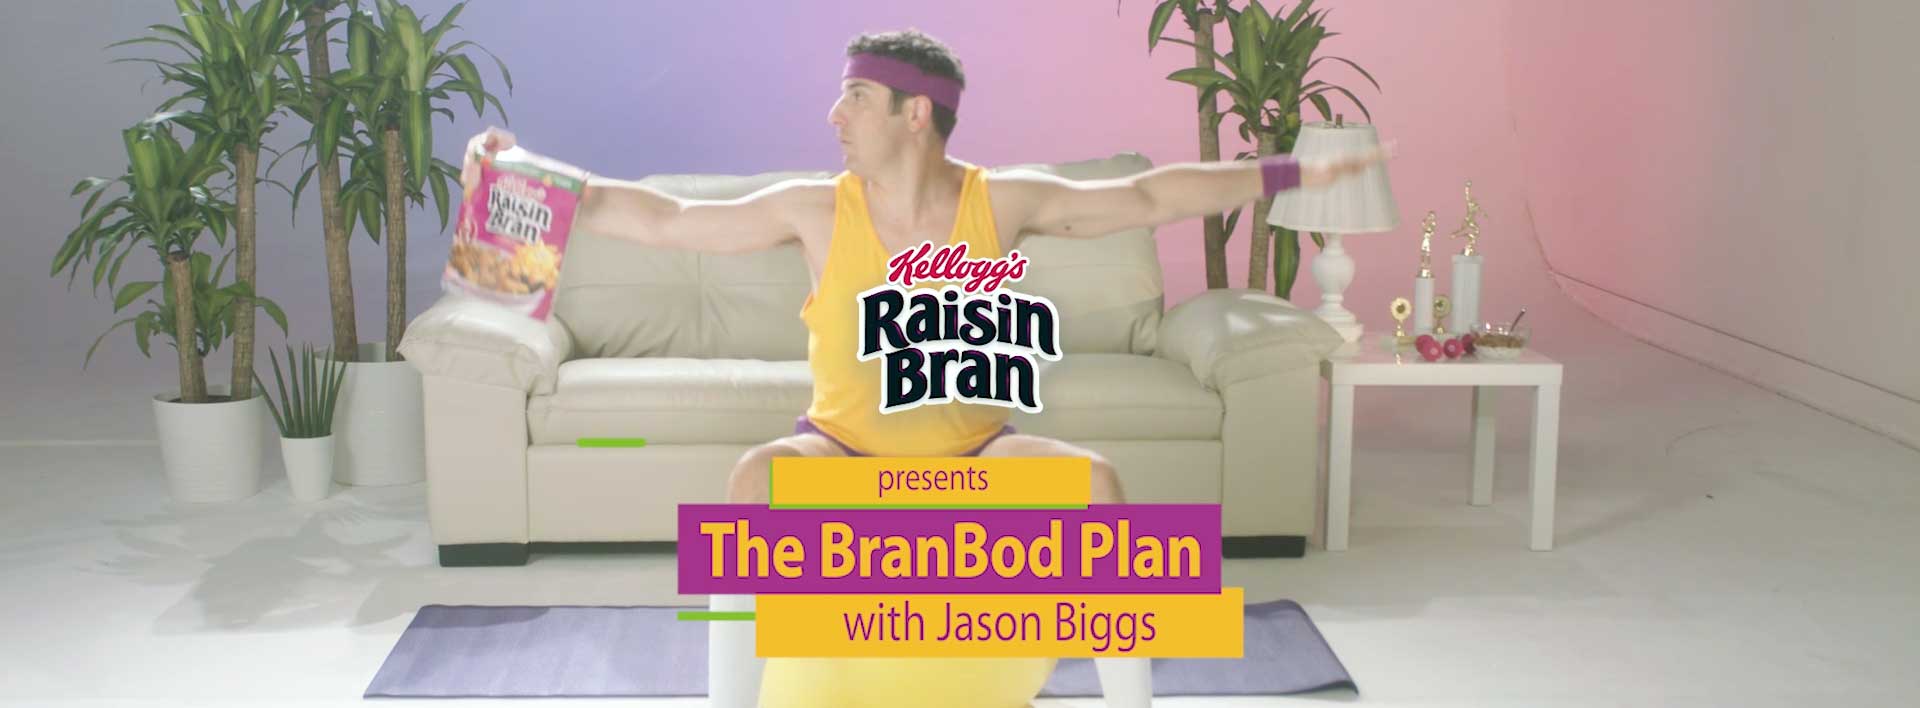 Jason Biggs makes digestive wellness sexy again with his new Kellogg’s Raisin Bran® BranBod Plan.